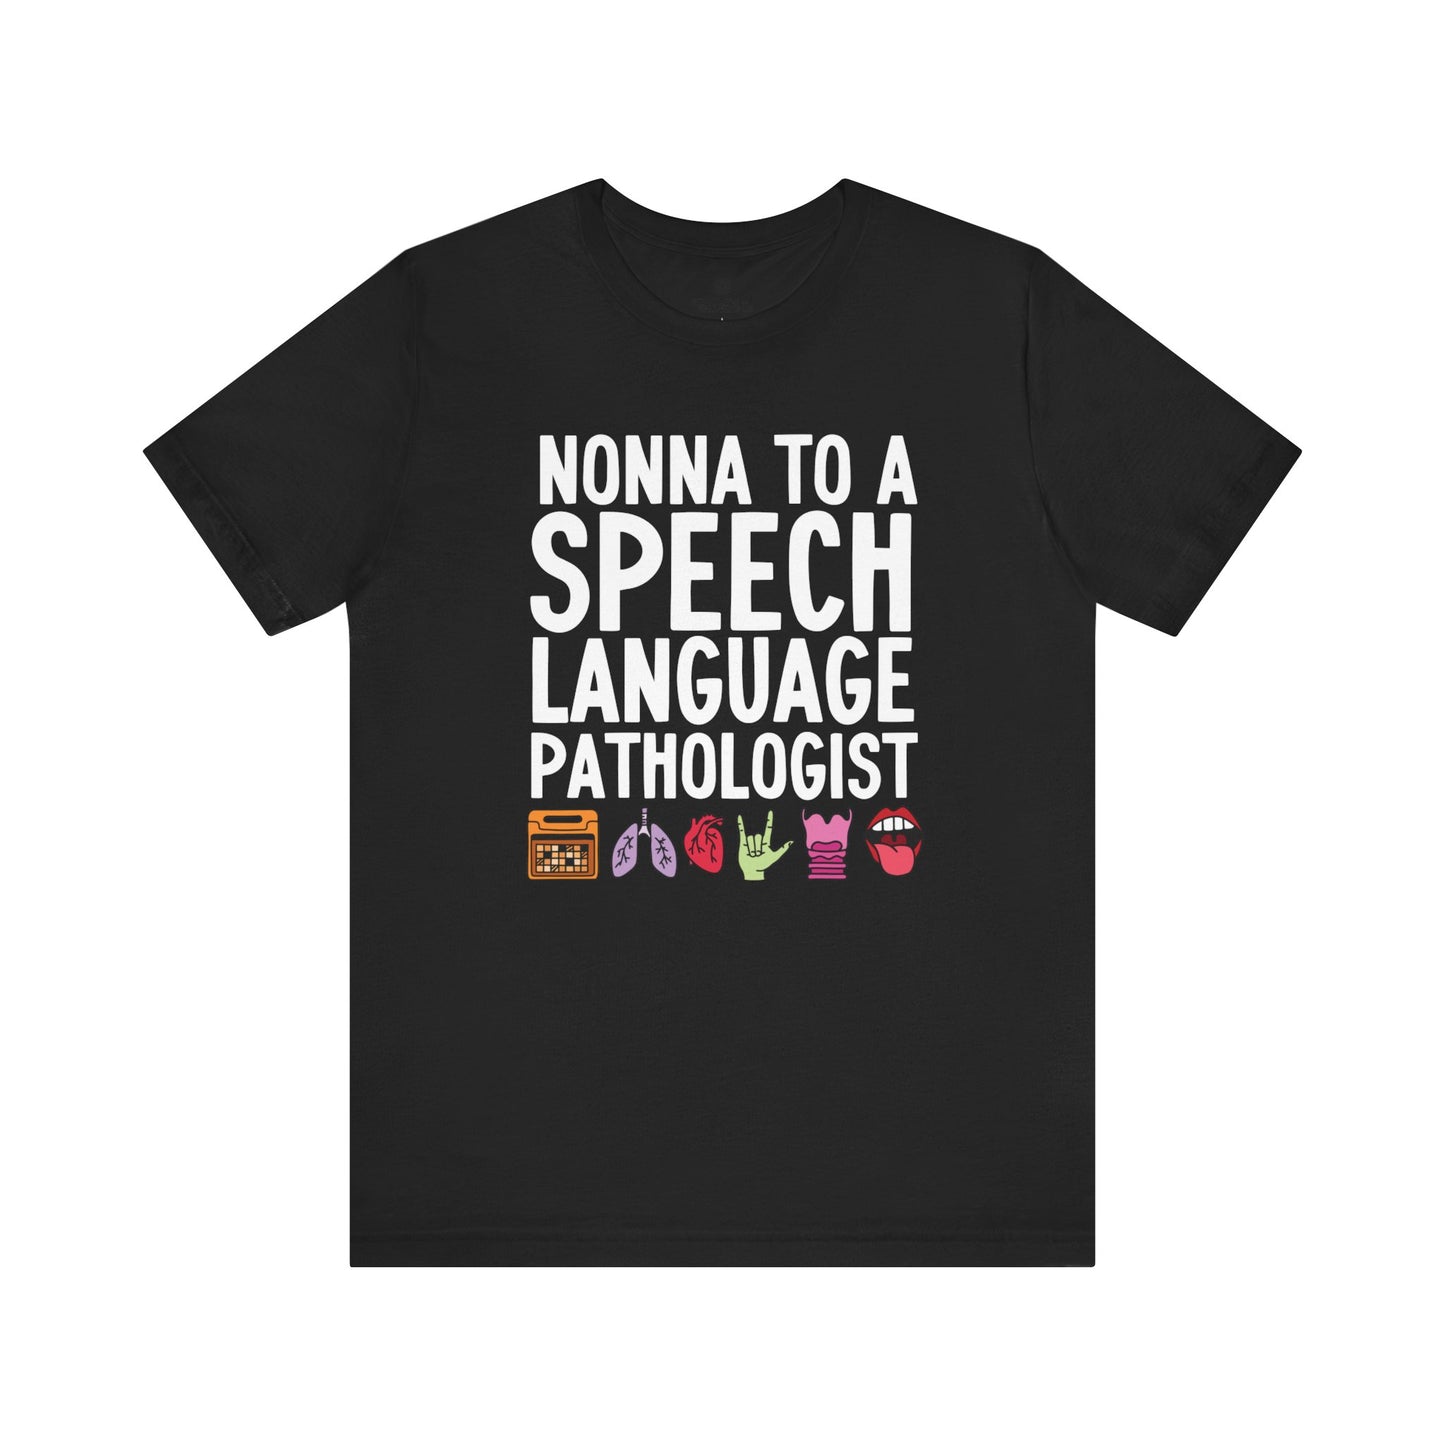 Nonna to a Speech Language Pathologist (SLP) Tee